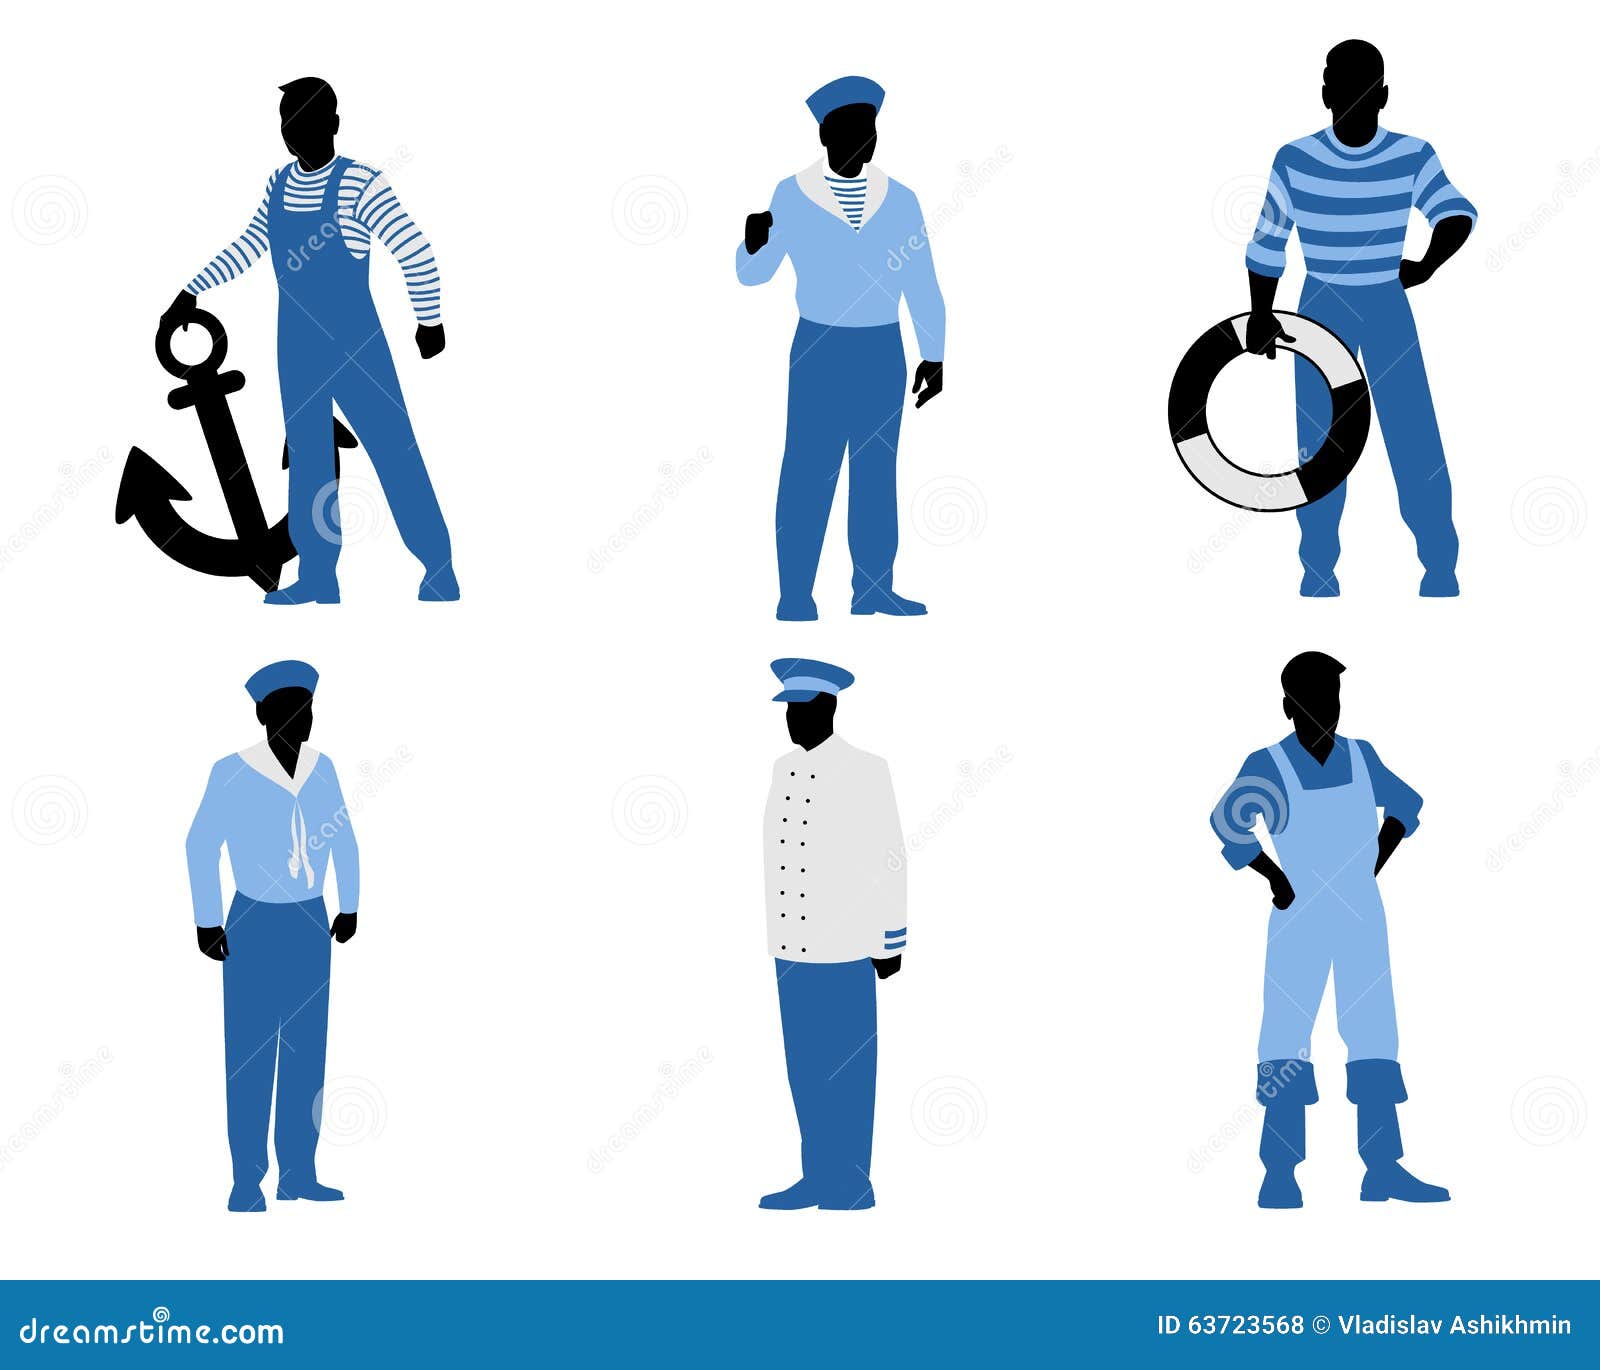 six sailors silhouettes